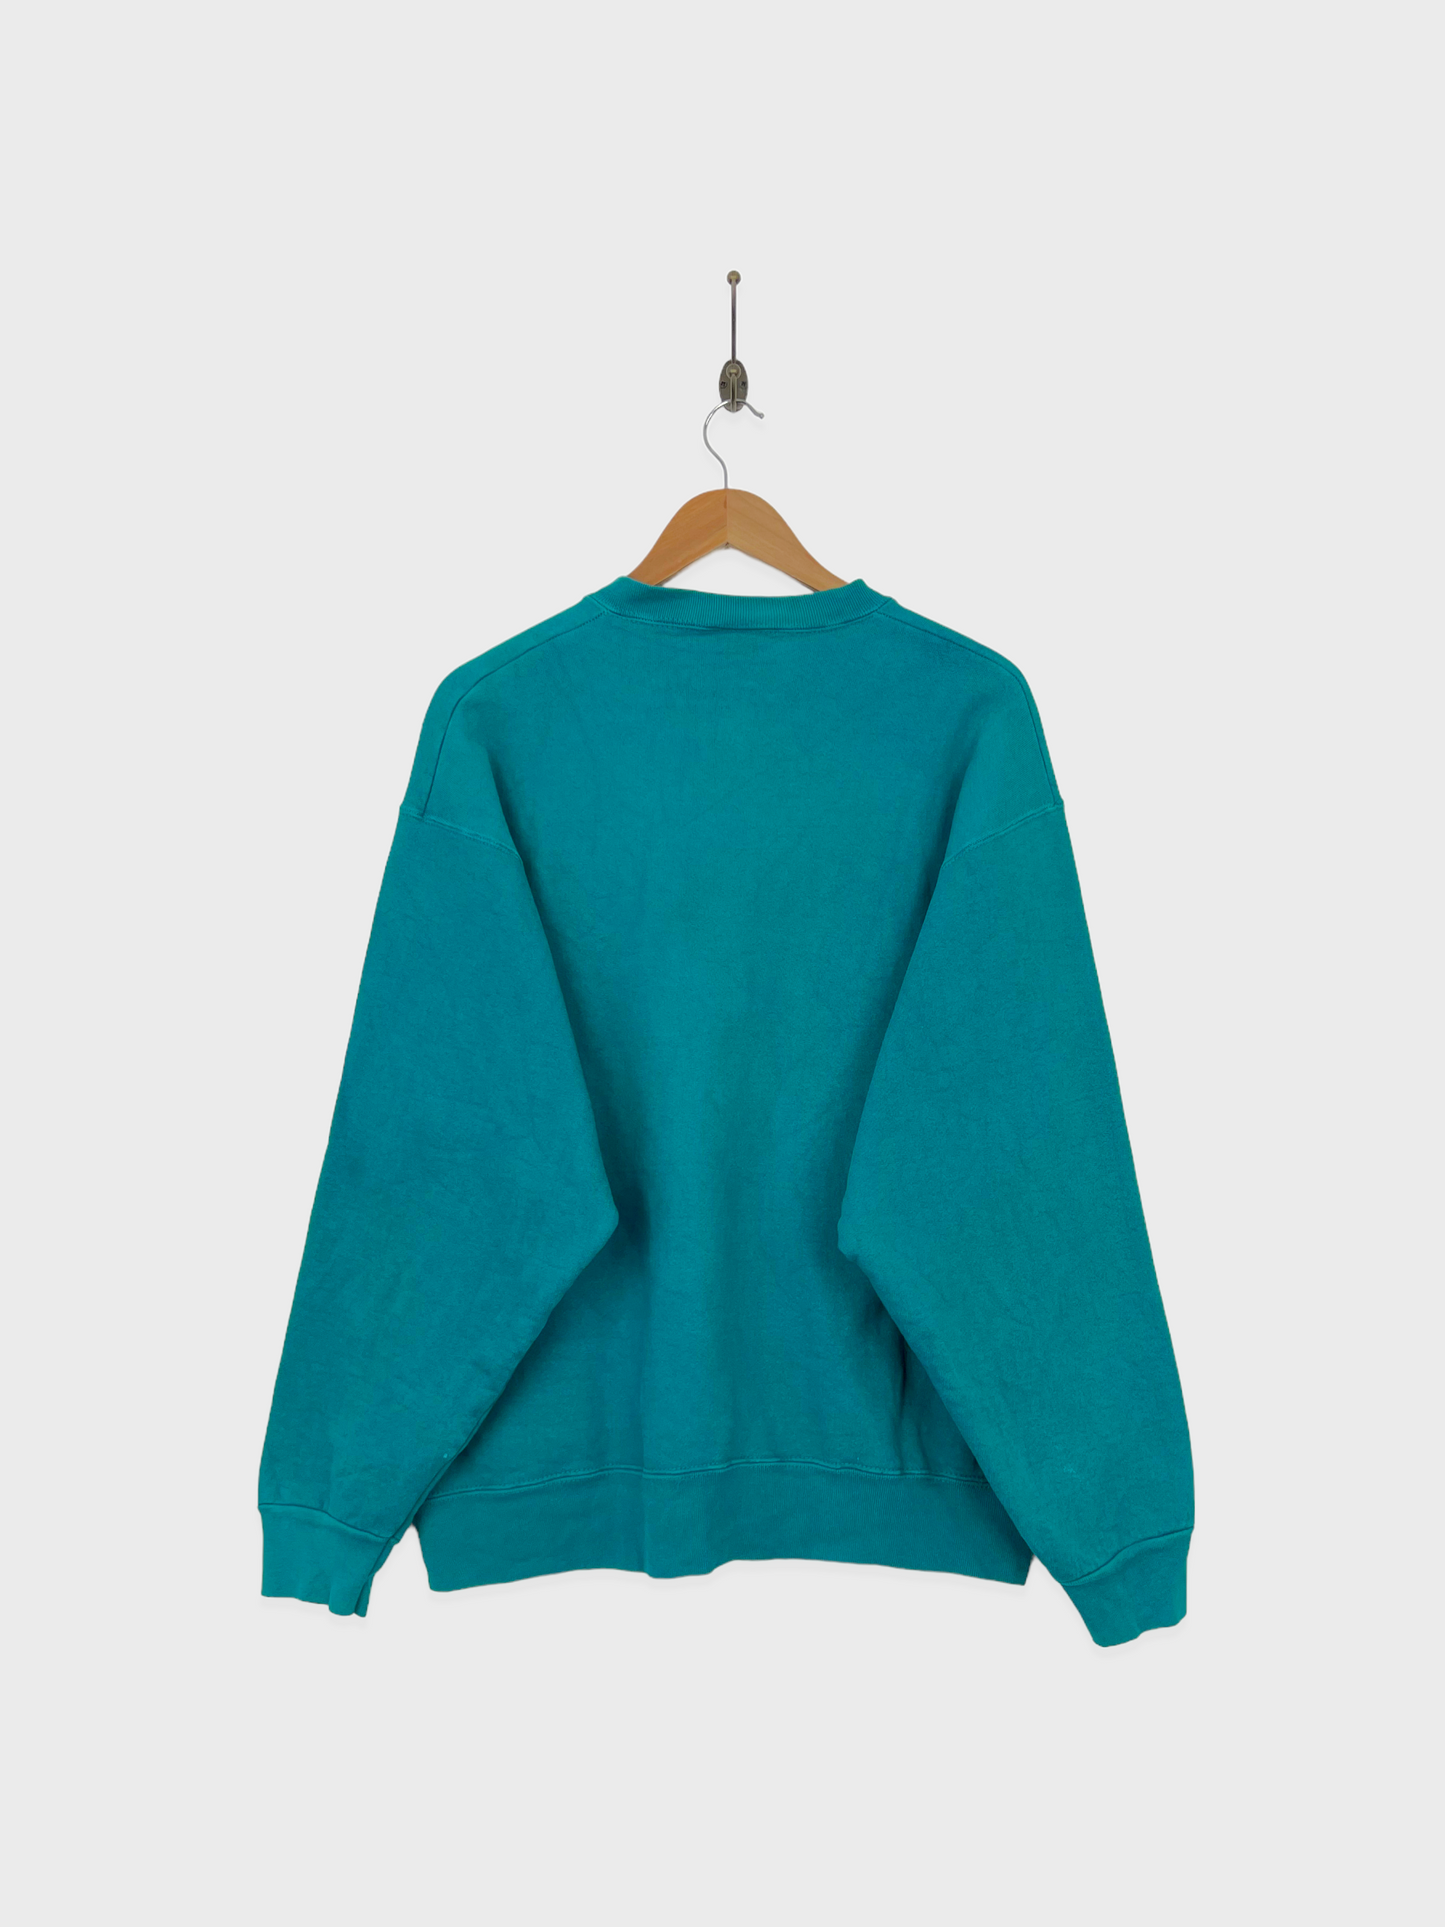 90's Boston USA Made Embroidered Vintage Sweatshirt Size M